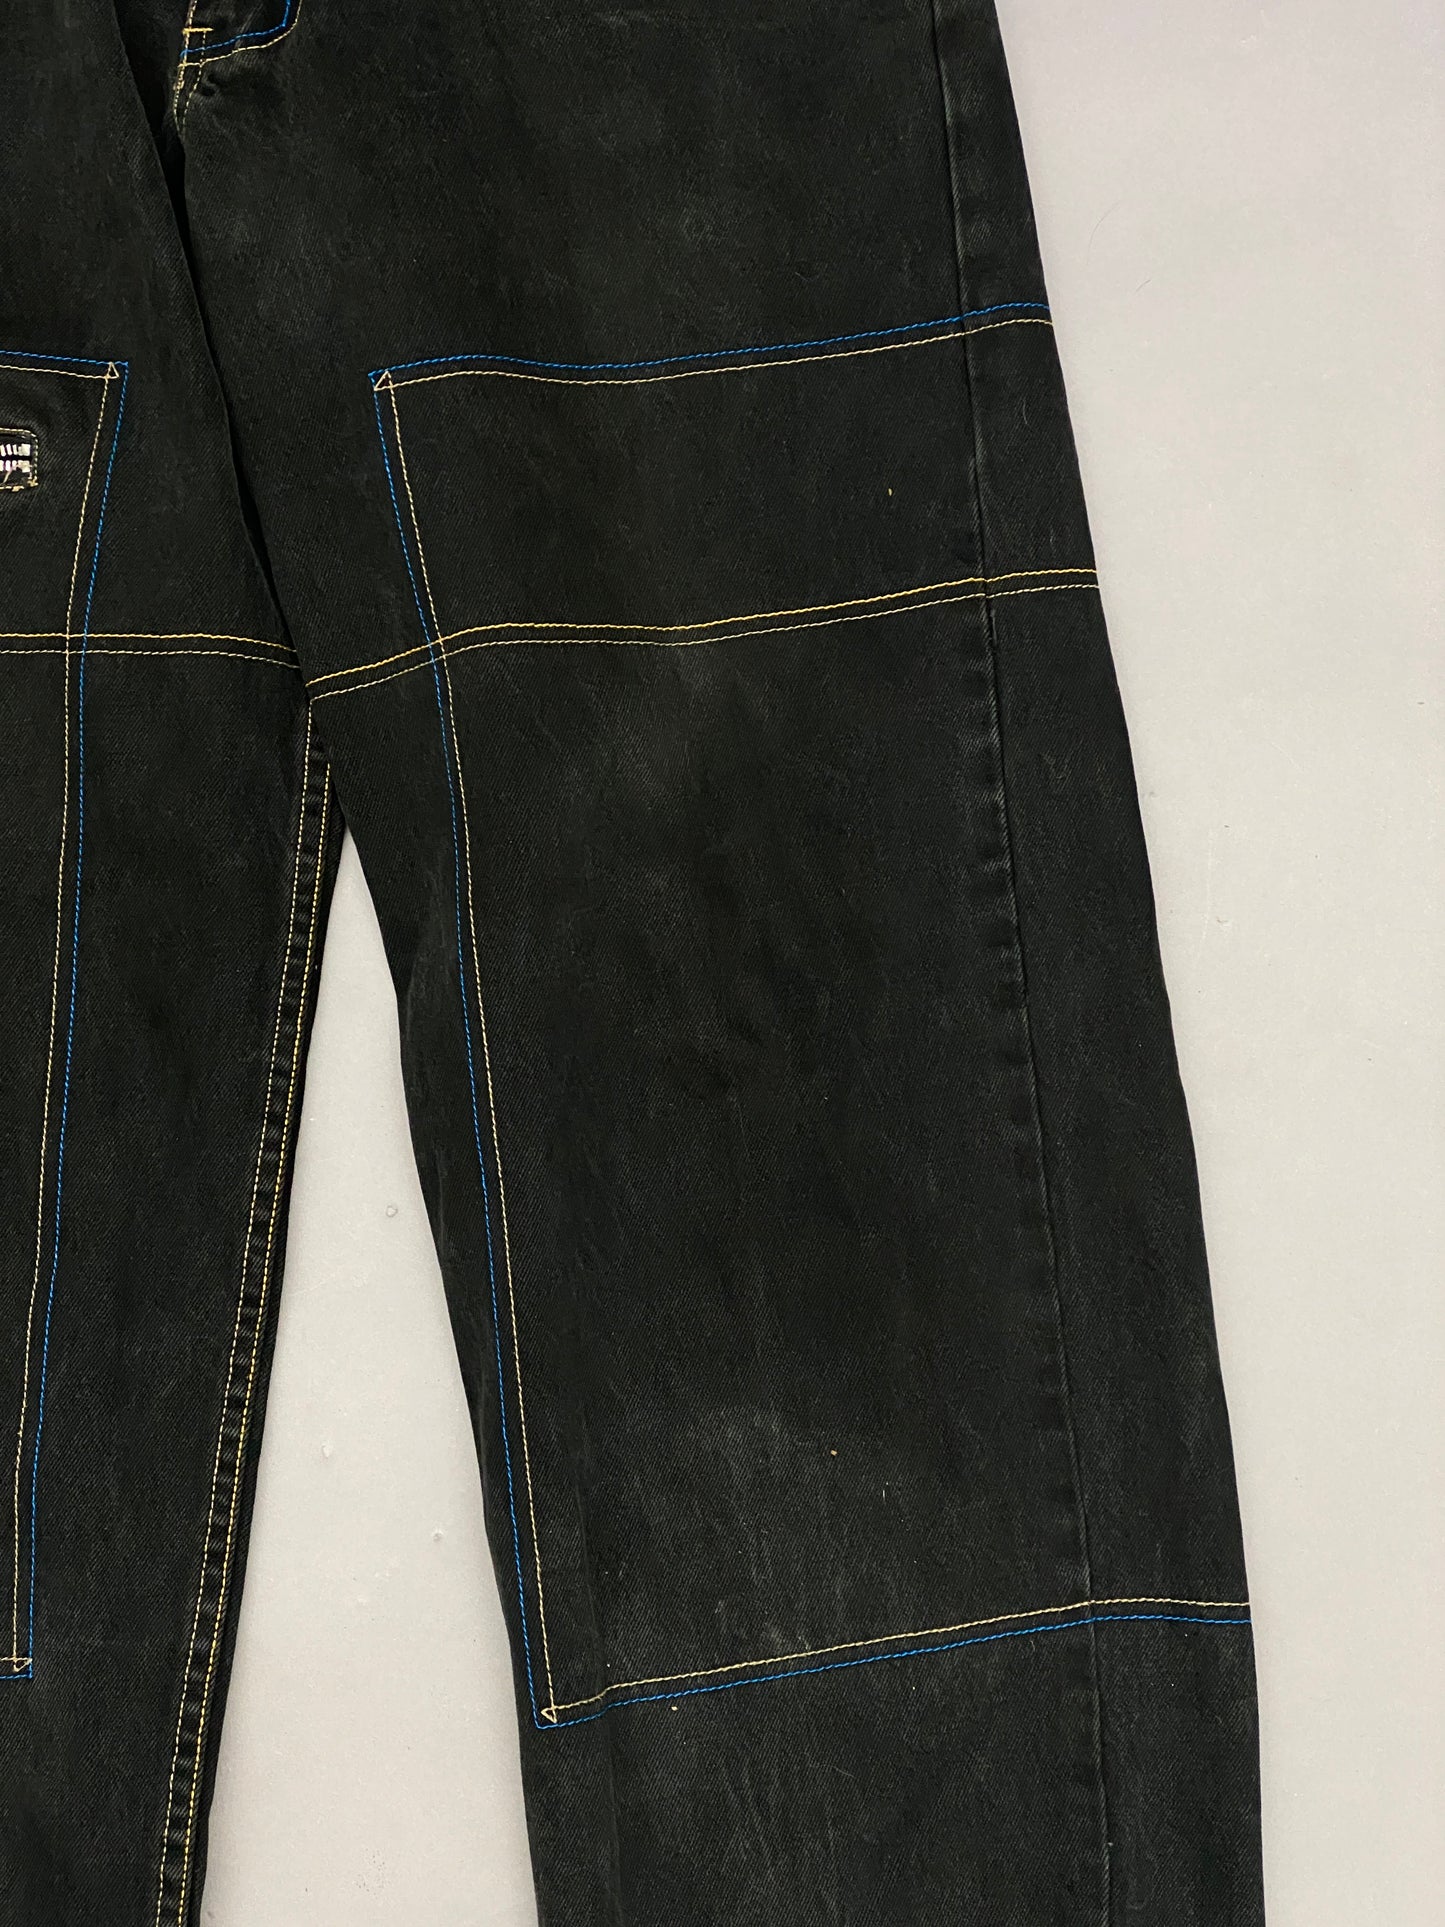 Paco Sport Multipocket Vintage Jeans - 33 x 34